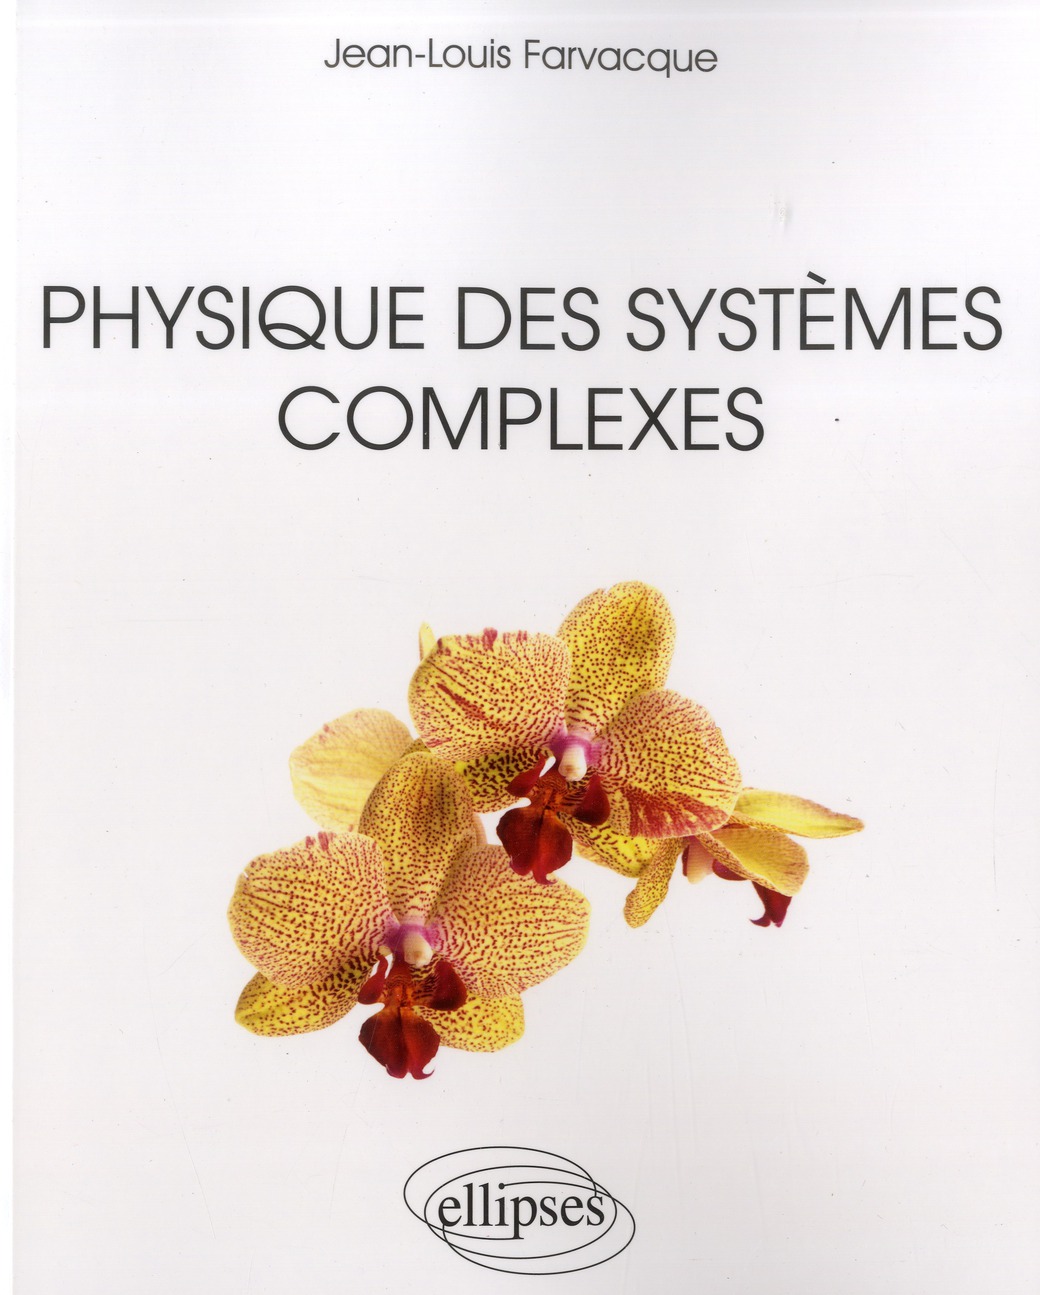 PHYSIQUE DES SYSTEMES COMPLEXES